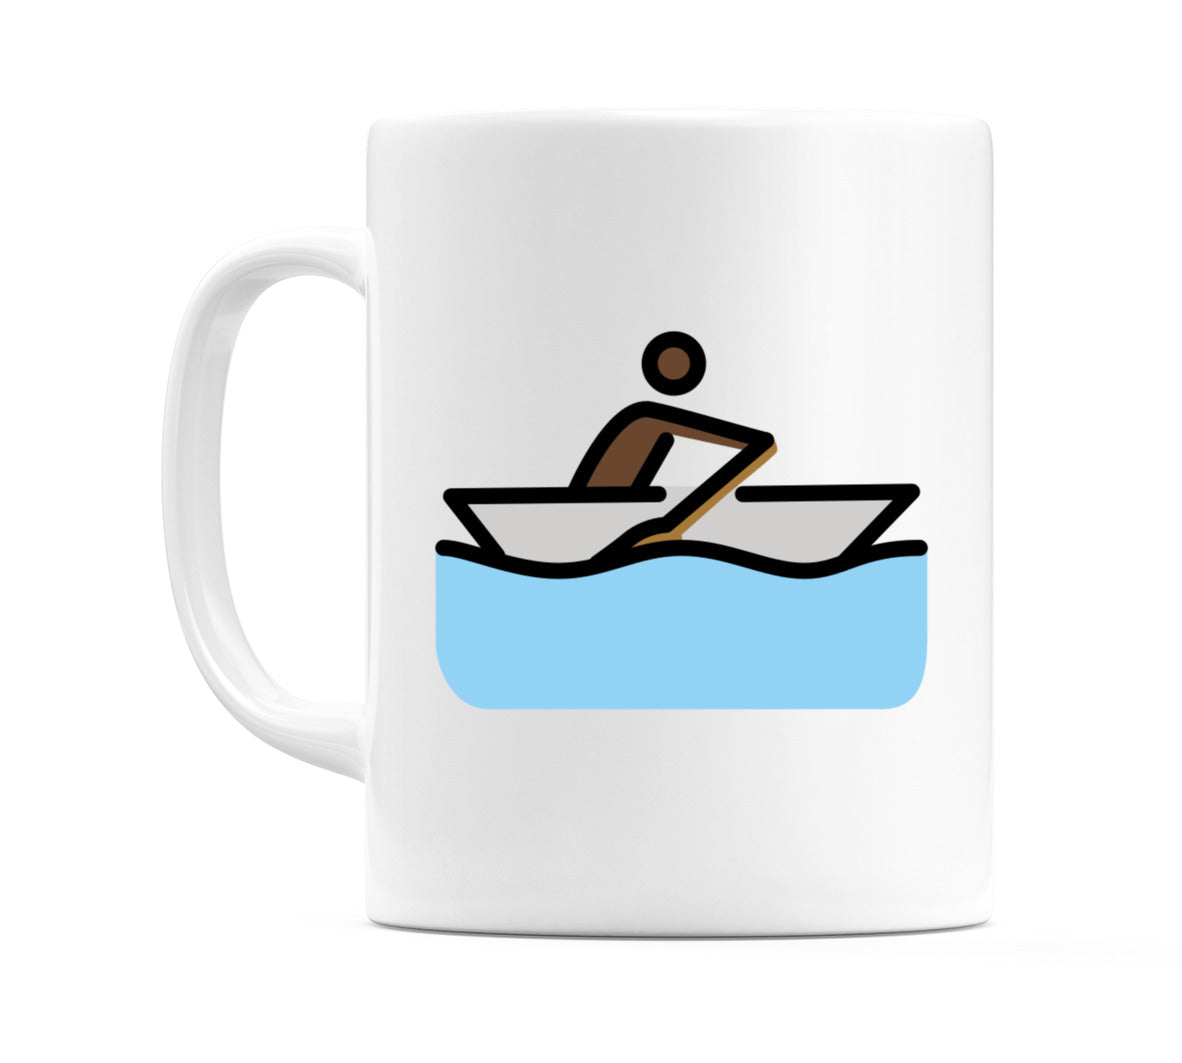 Male Rowing Boat: Dark Skin Tone Emoji Mug